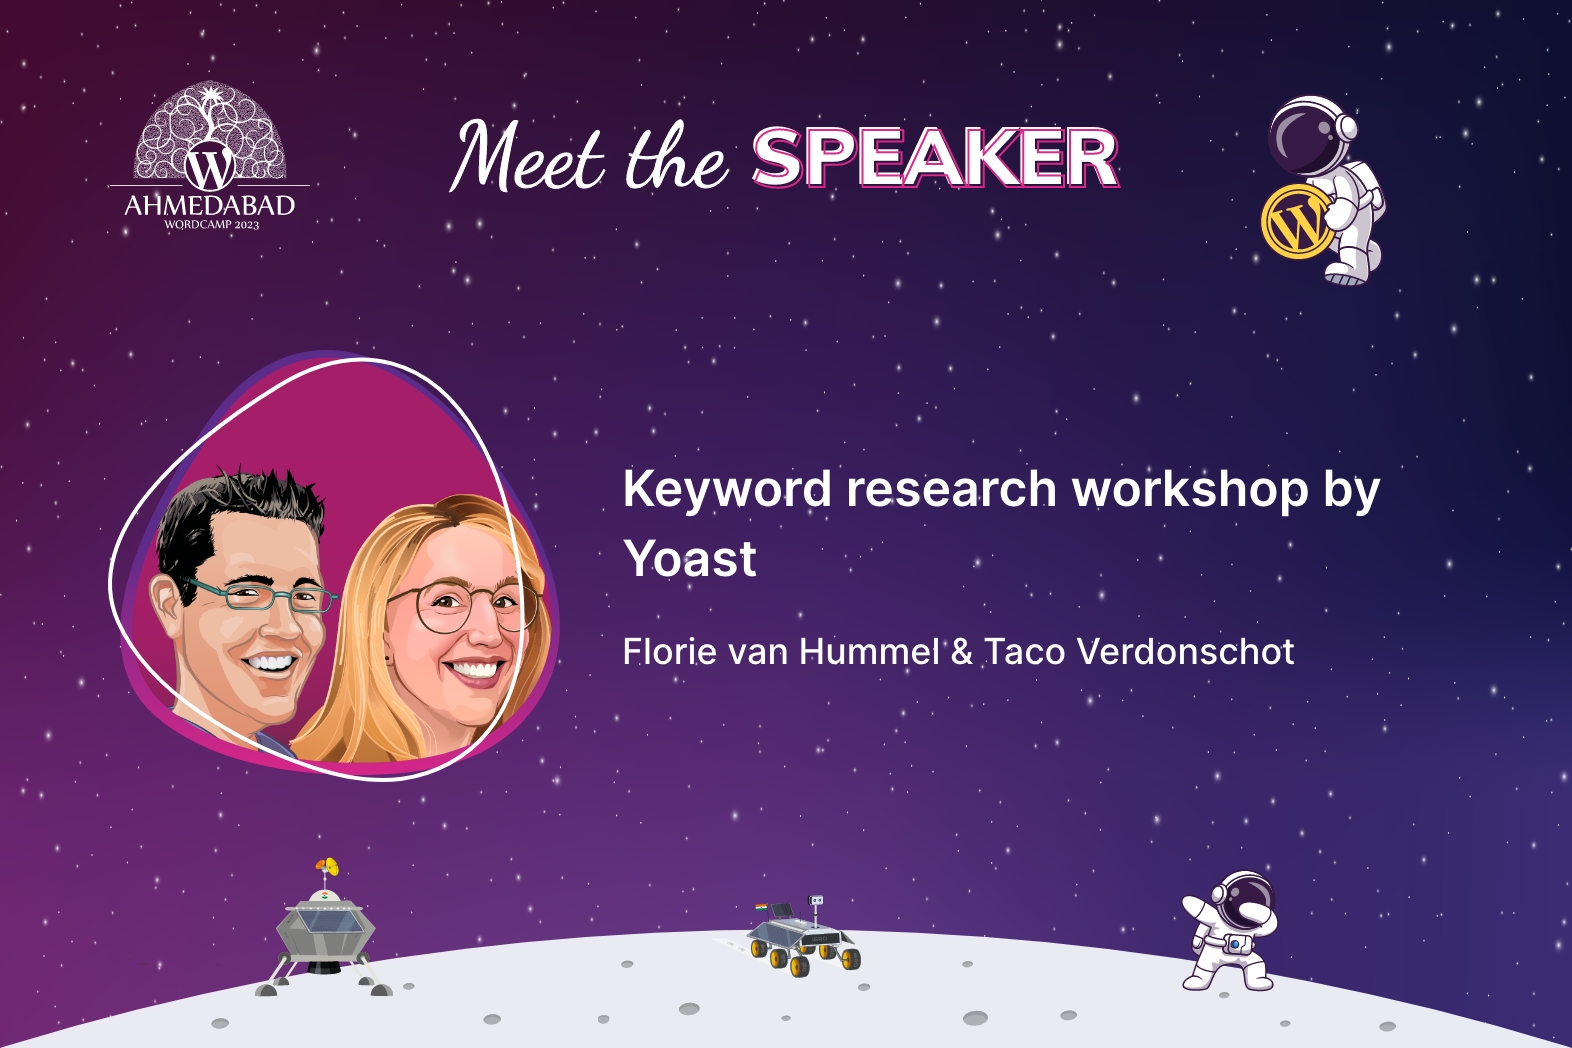 Keyword research workshop by Yoast( Florie van Hummel & Taco Verdonschot)